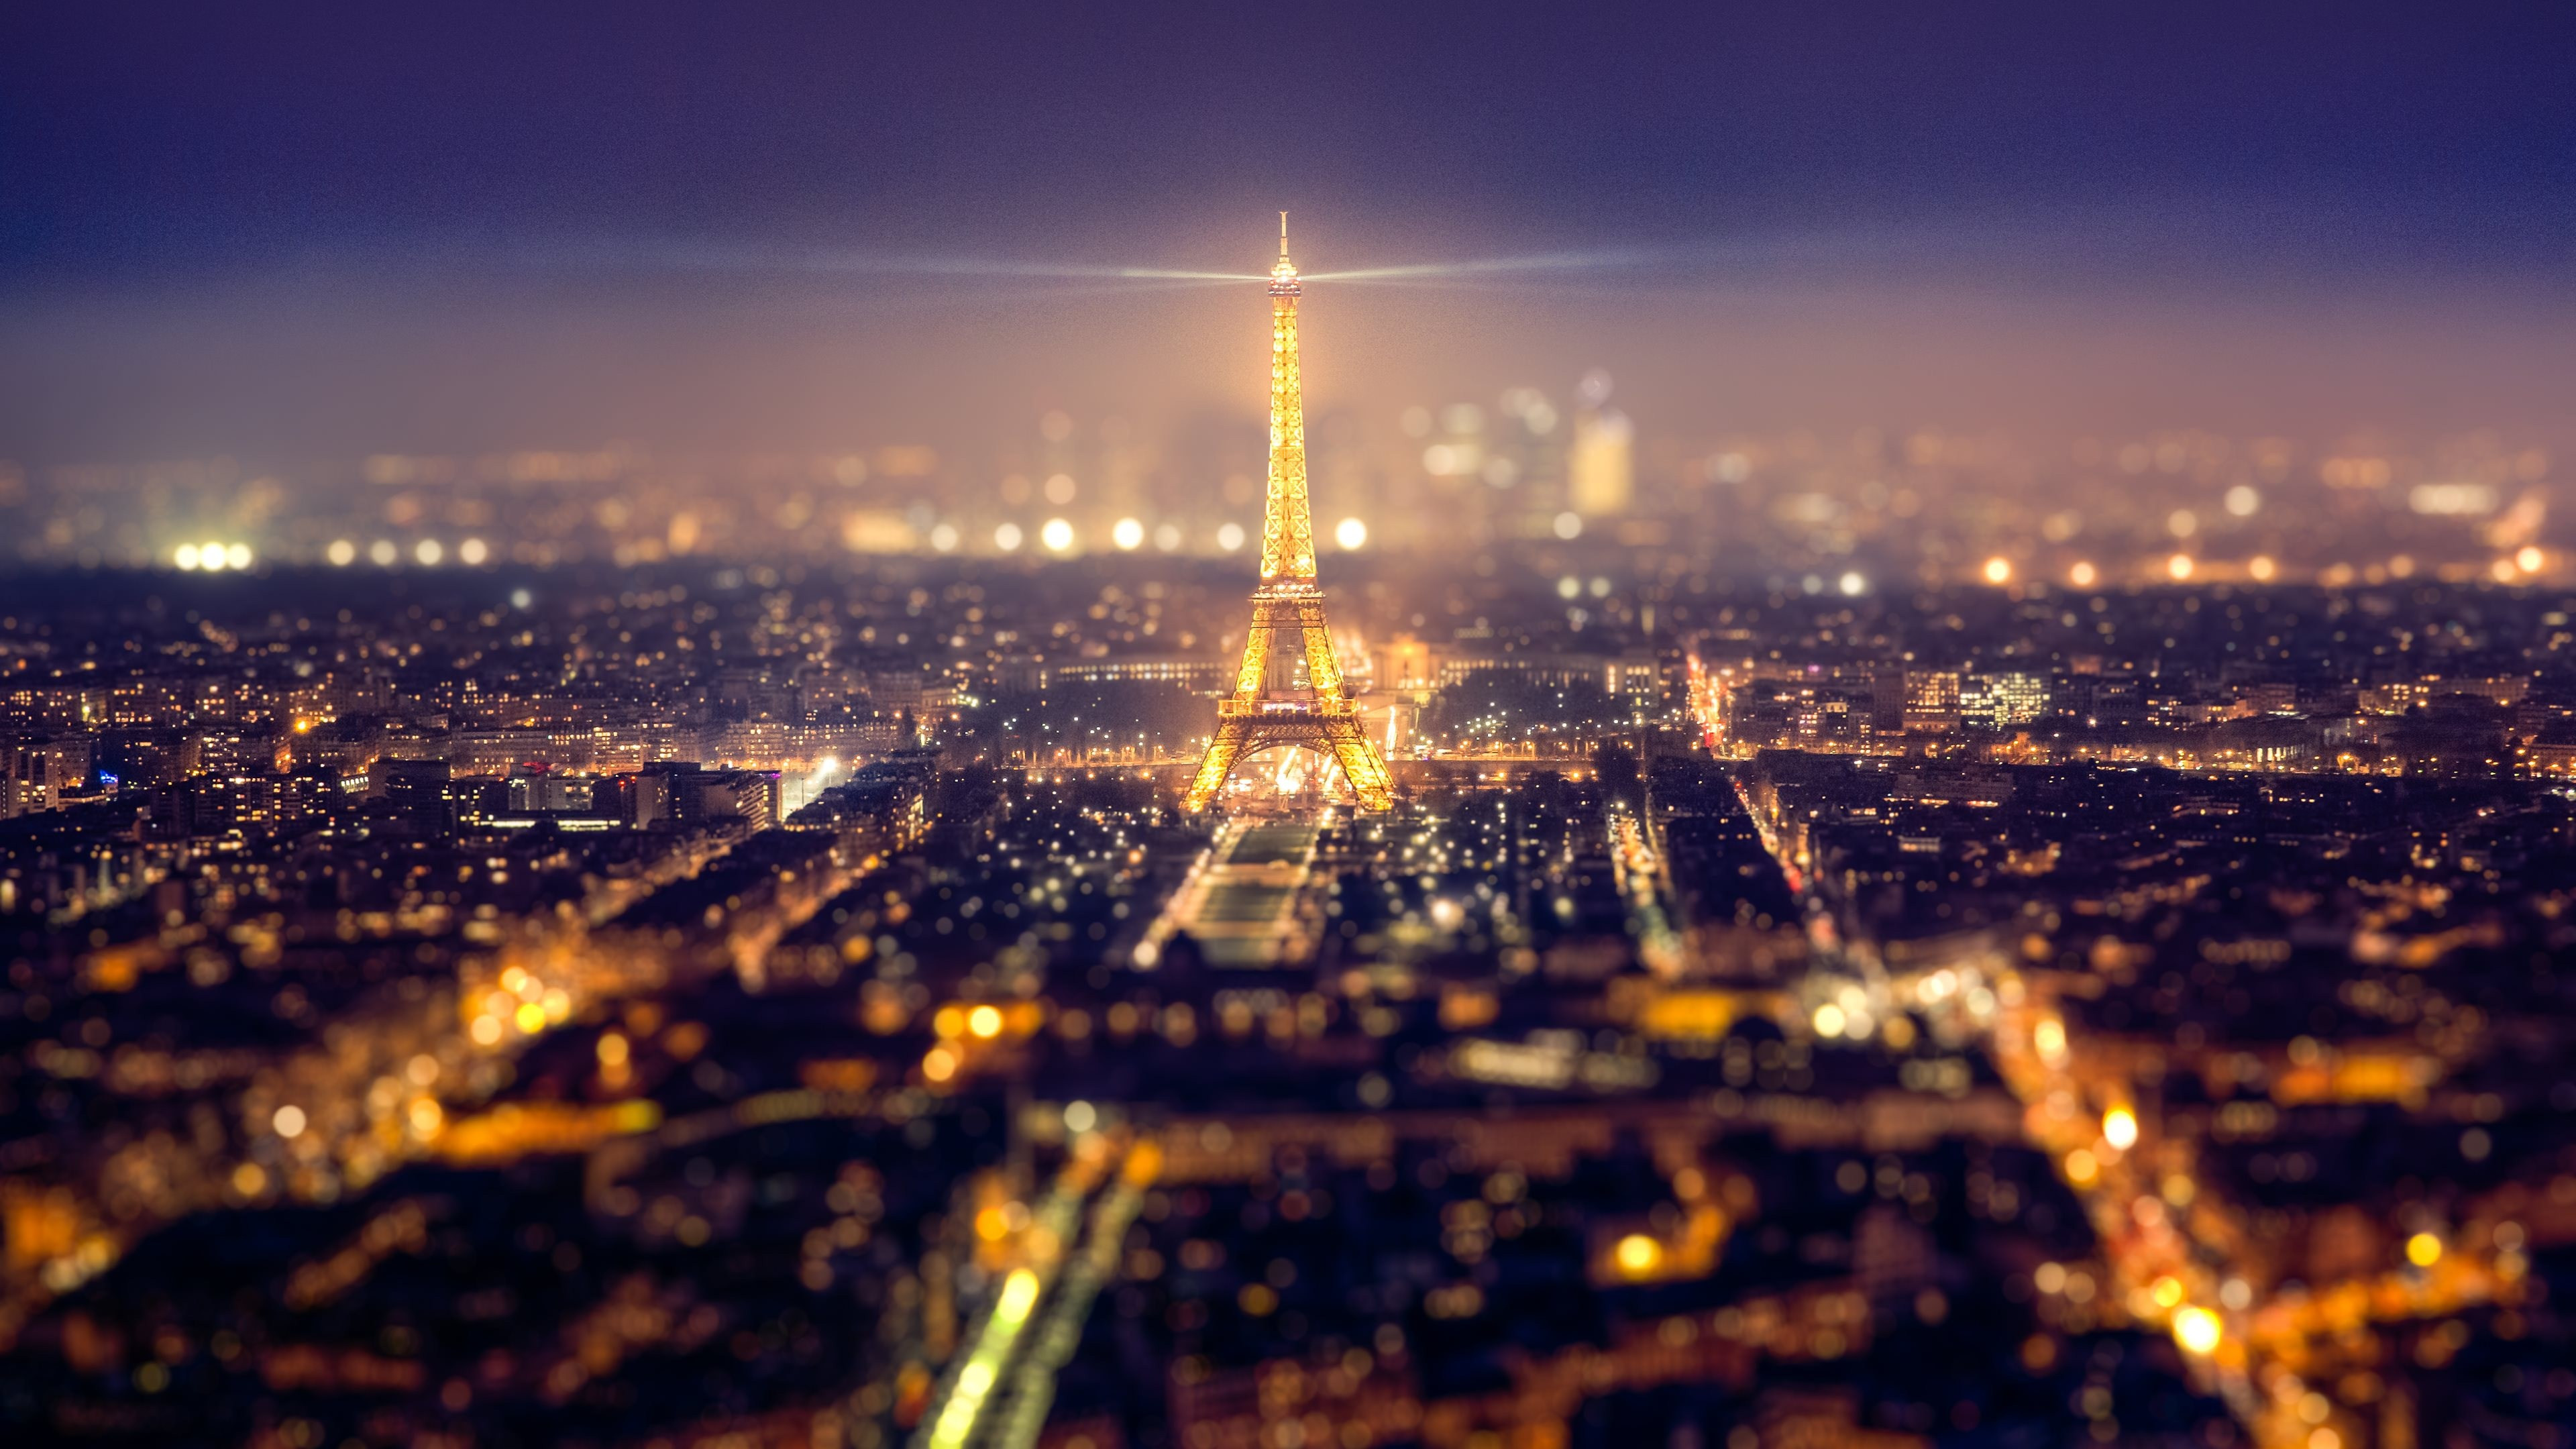 3840x2160 Eiffel tower at Night Paris France Wallpaper Desktop Backgrounds Desktop